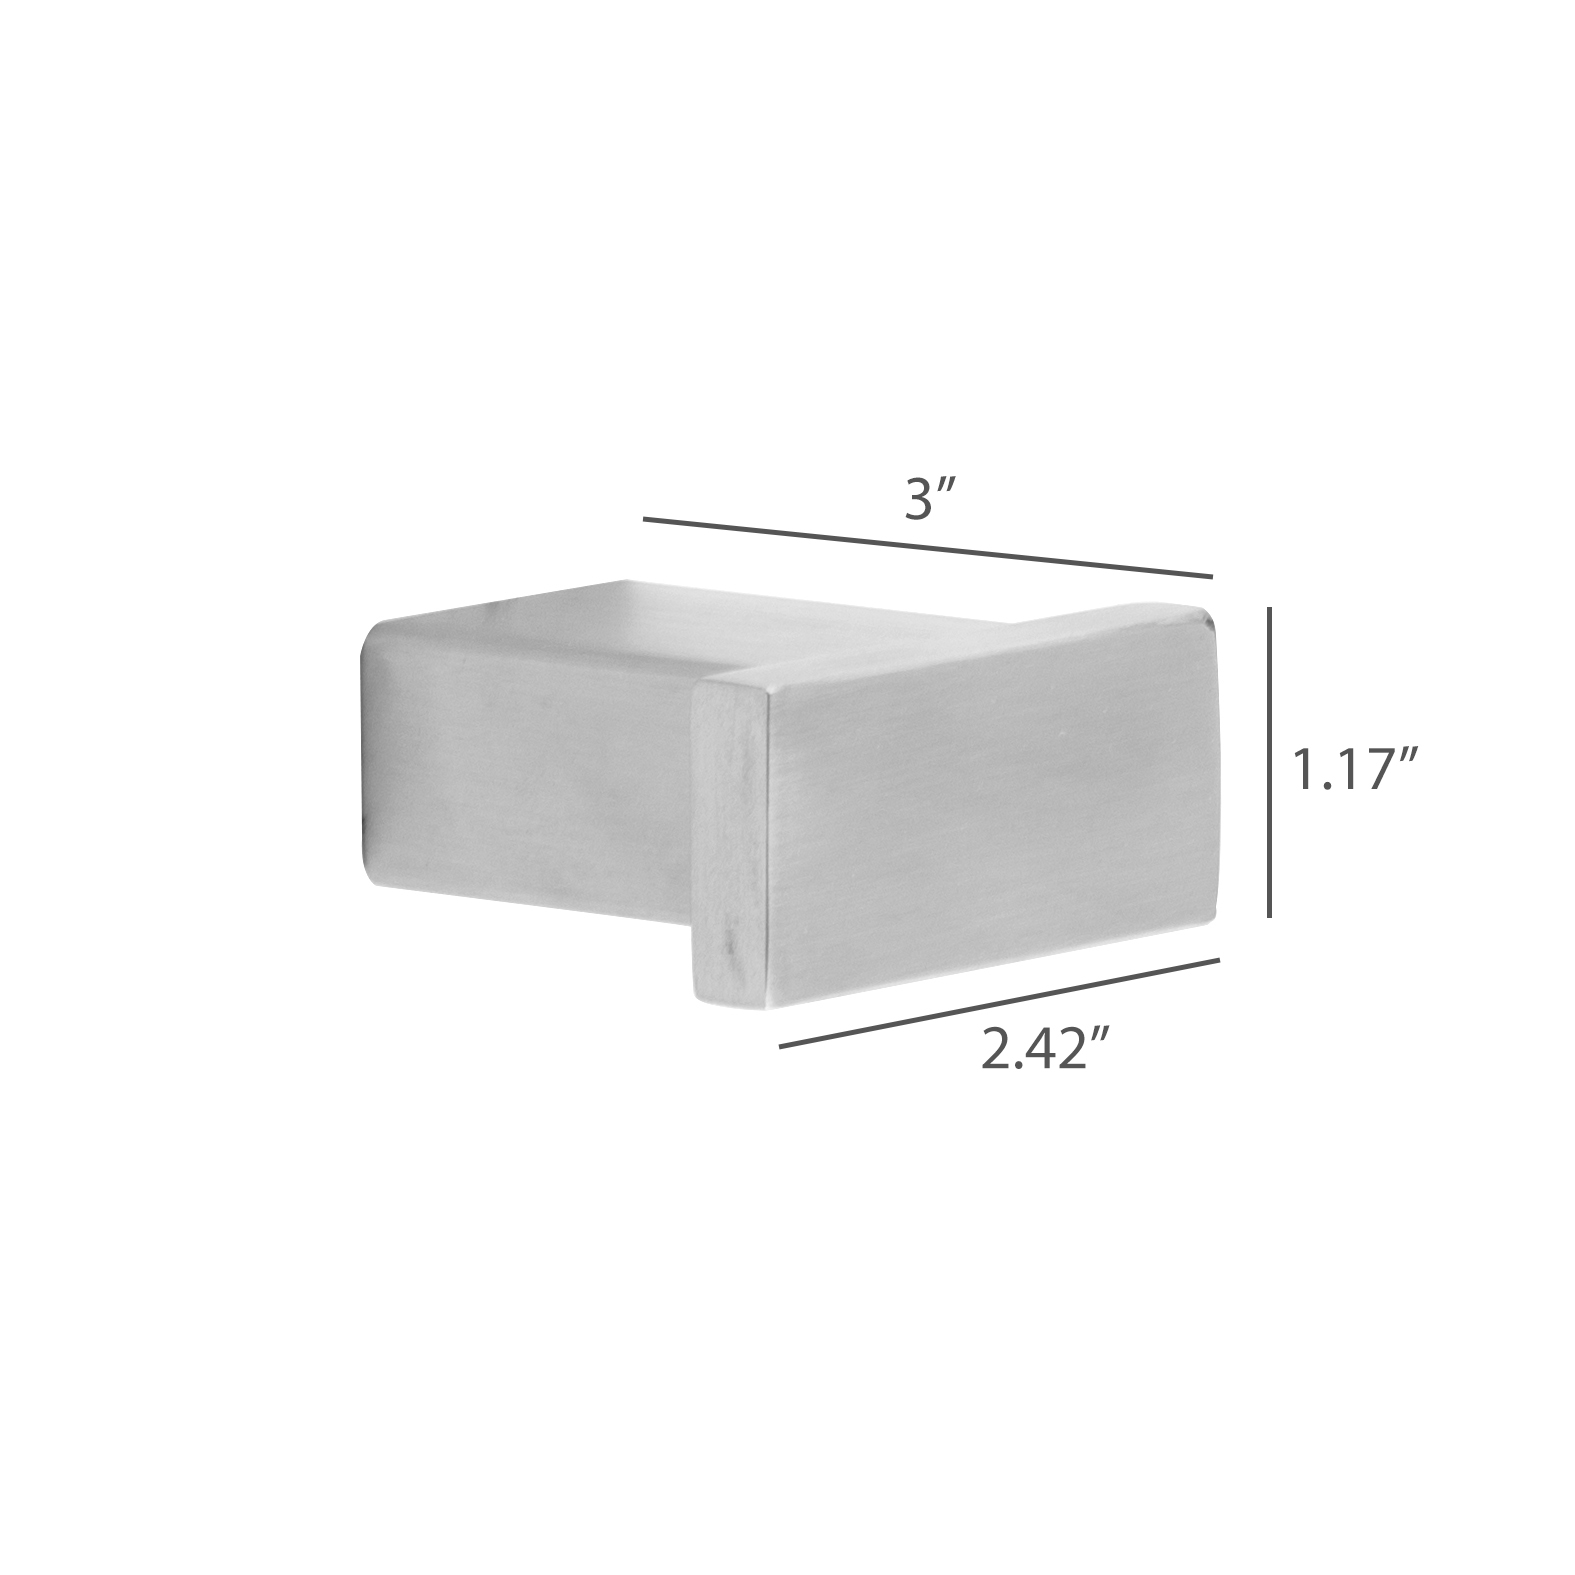 BOANN Solid 304 Stainless Steel Bath Hardware Bathroom Accessories 5pcs Set  (Towel Bar/ring/hook, Toilet Paper Holder,bathrobe)